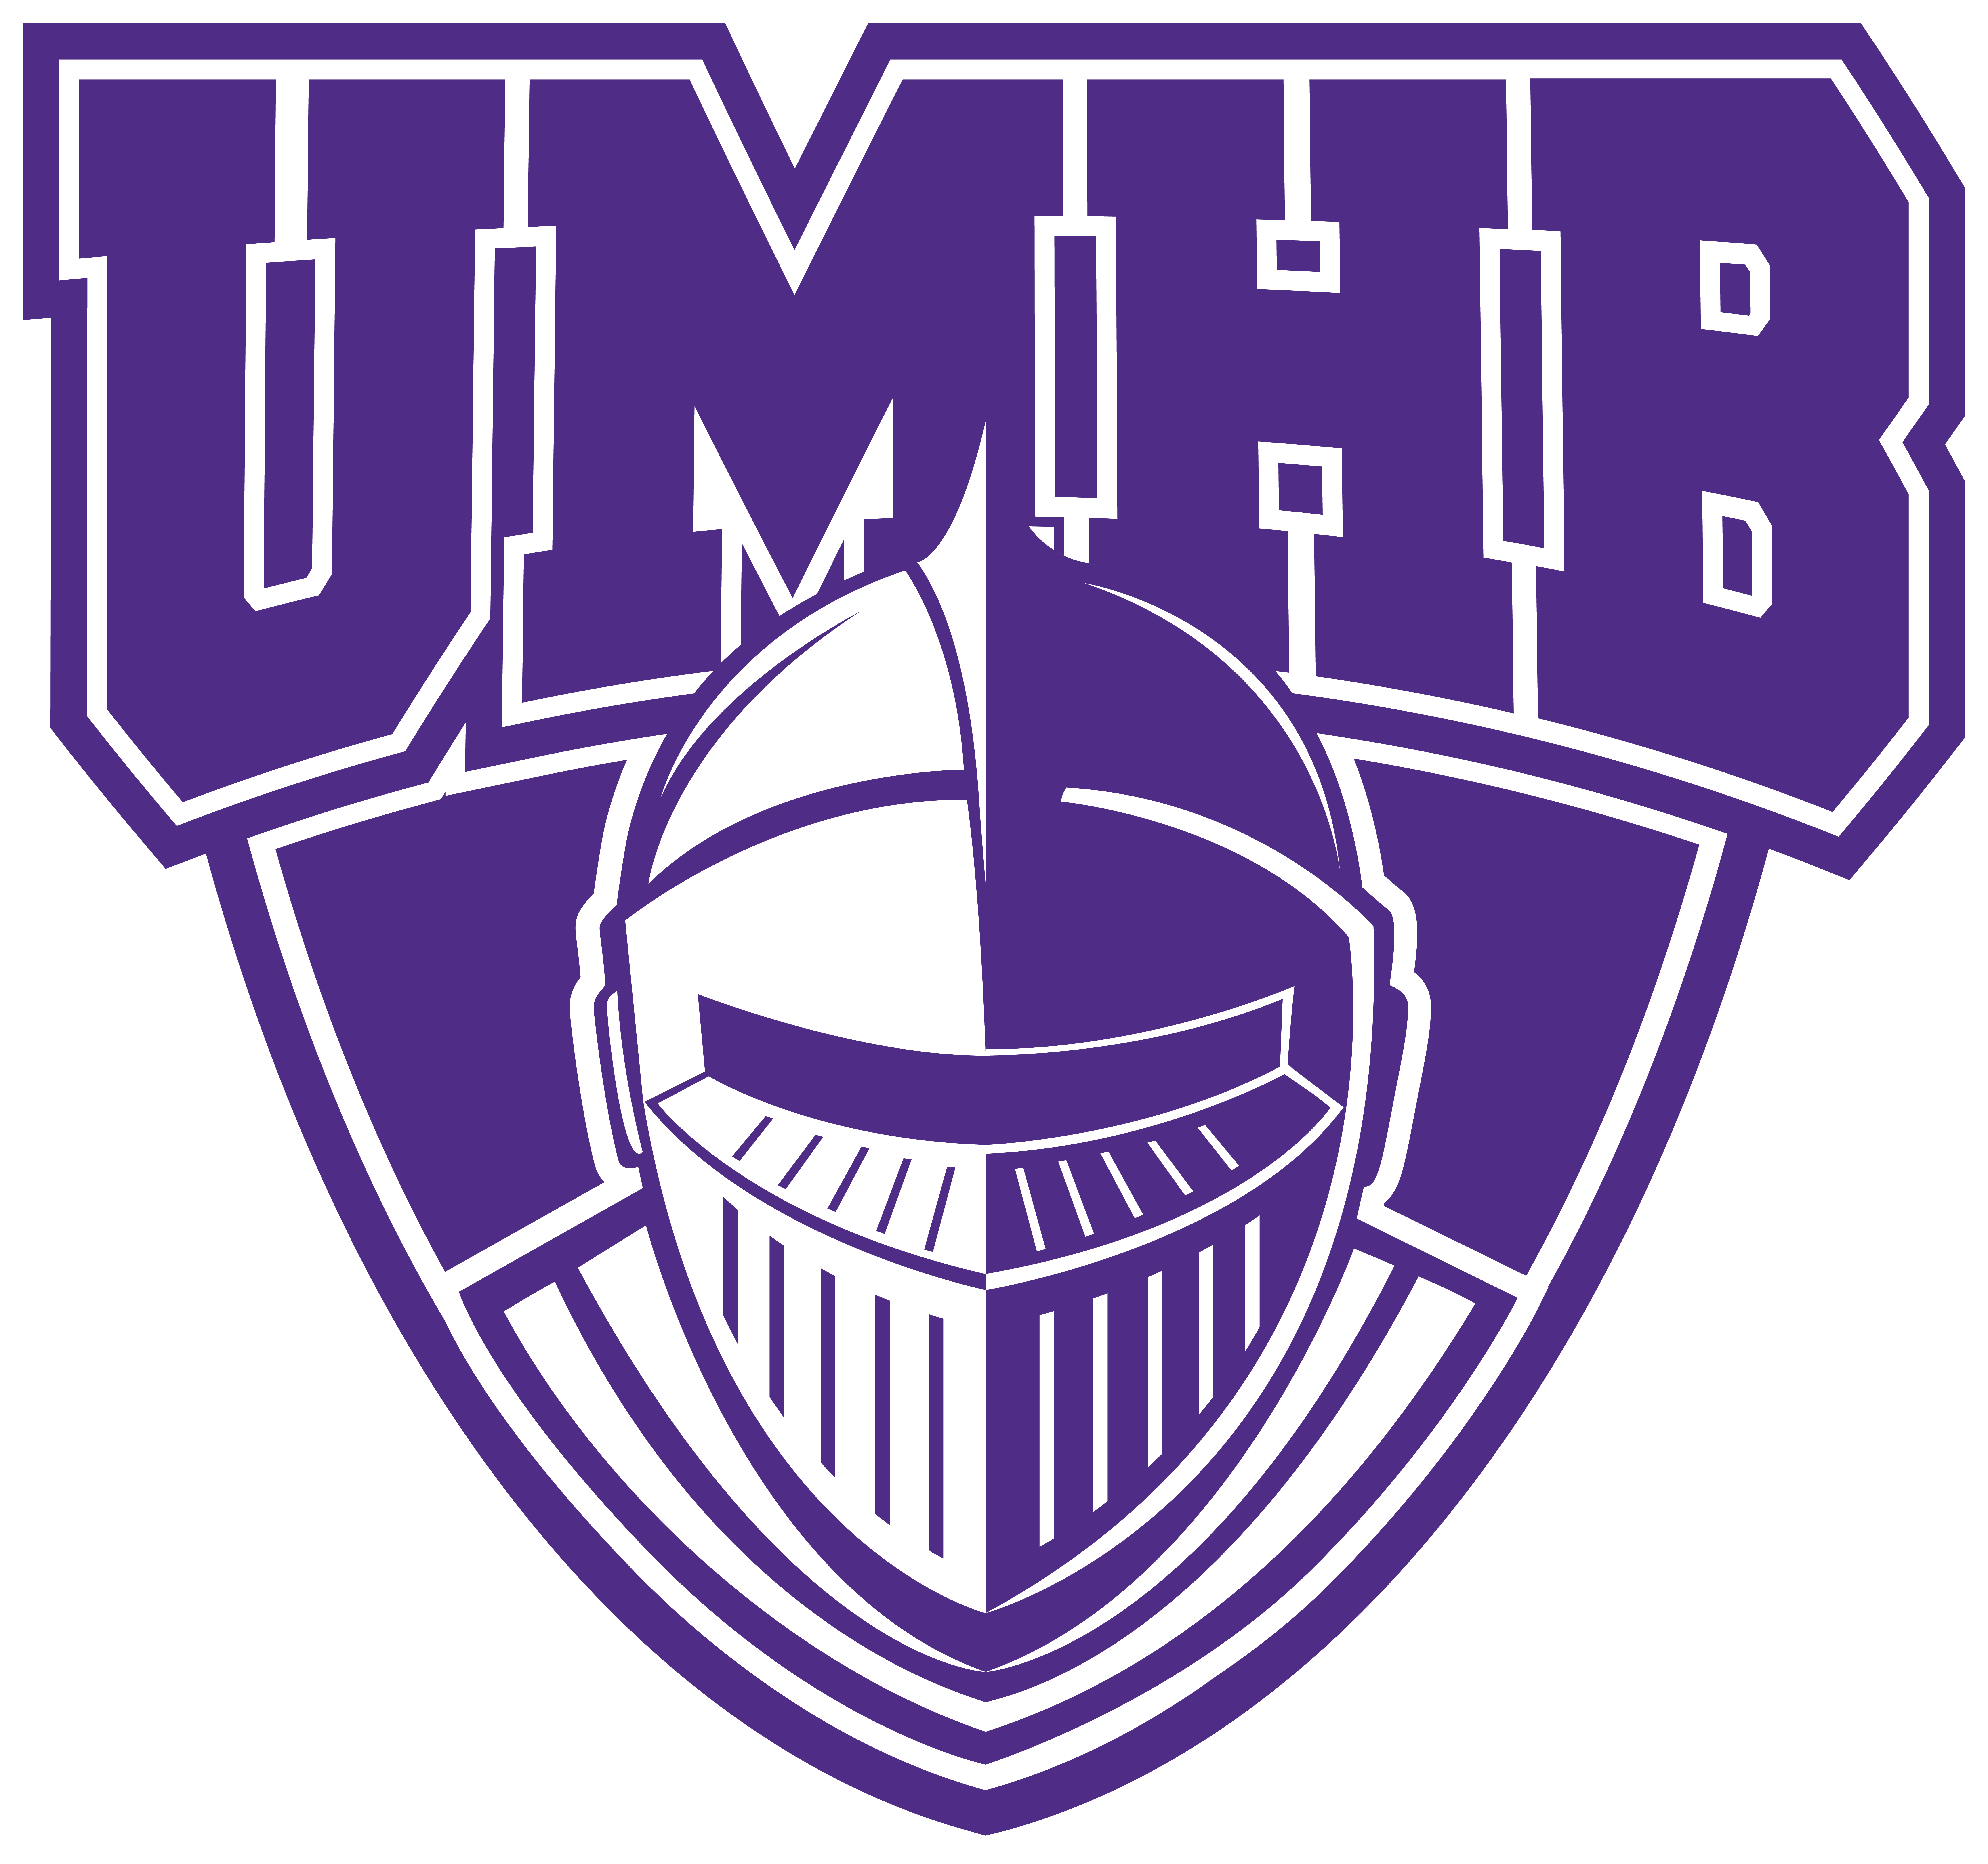  UMHB Athetic logo - color purple